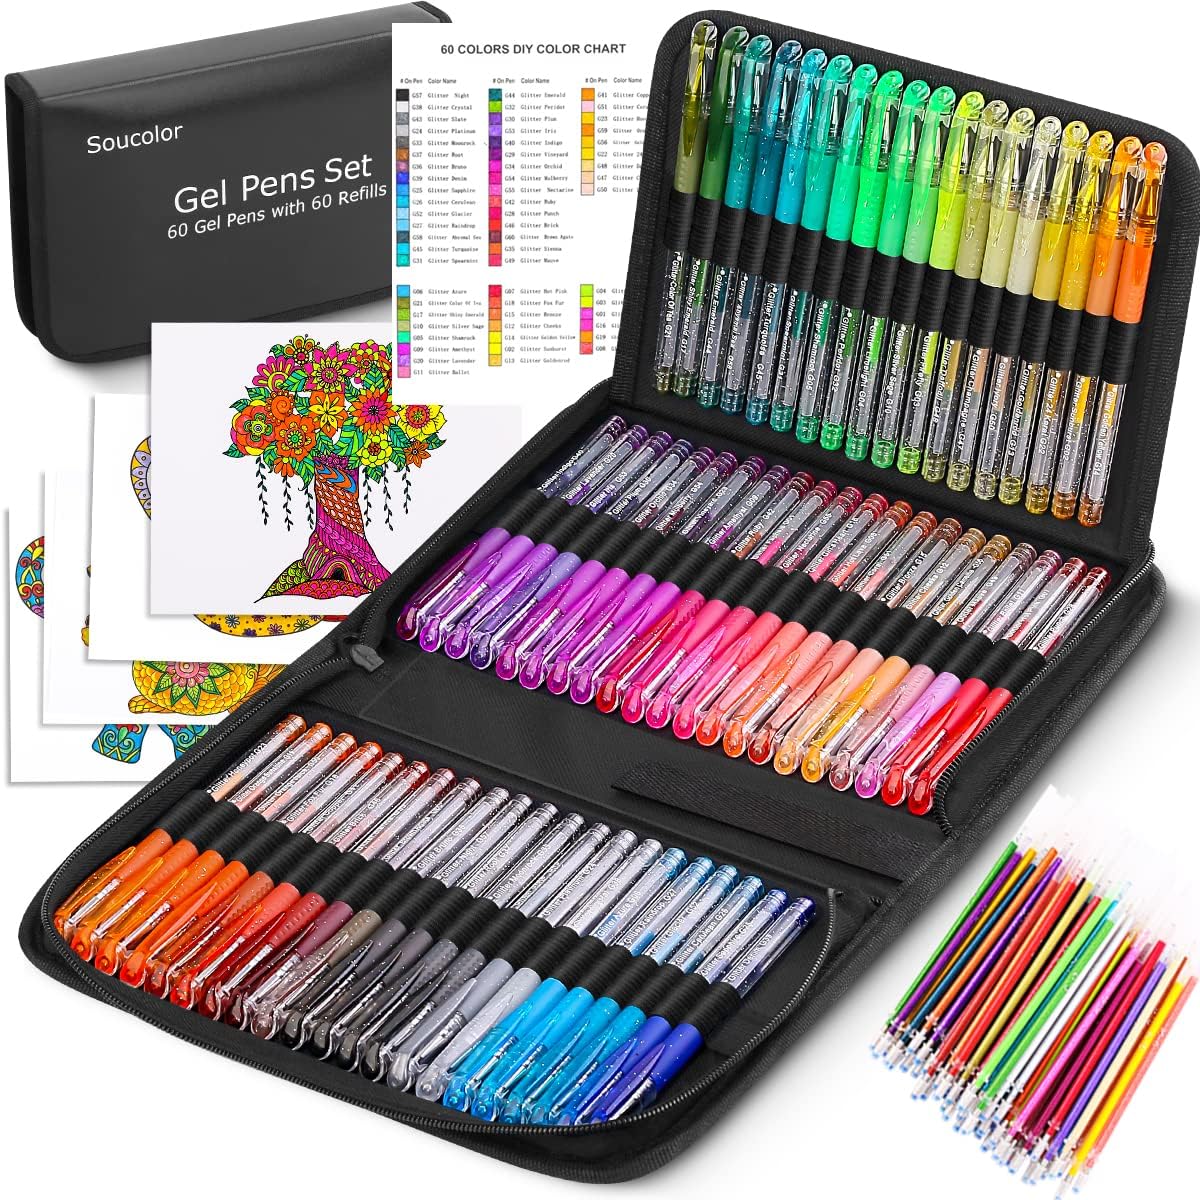  TANMIT Gel Pens, 36 Colors Gel Pens Set for Adult